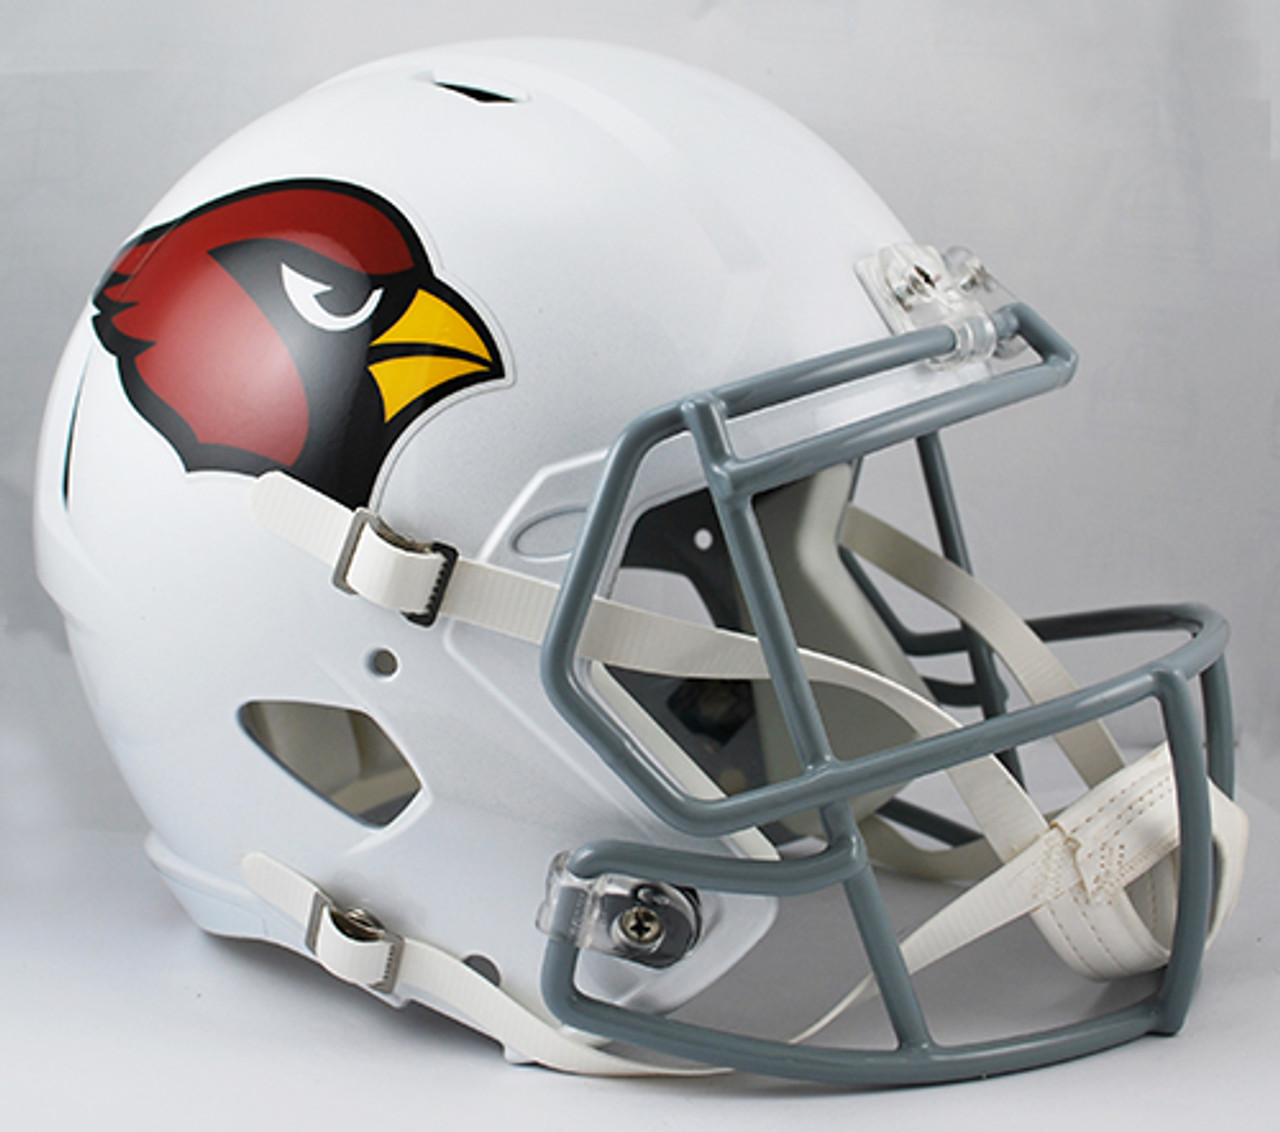 Should the Arizona Cardinals wear black helmets permanently?